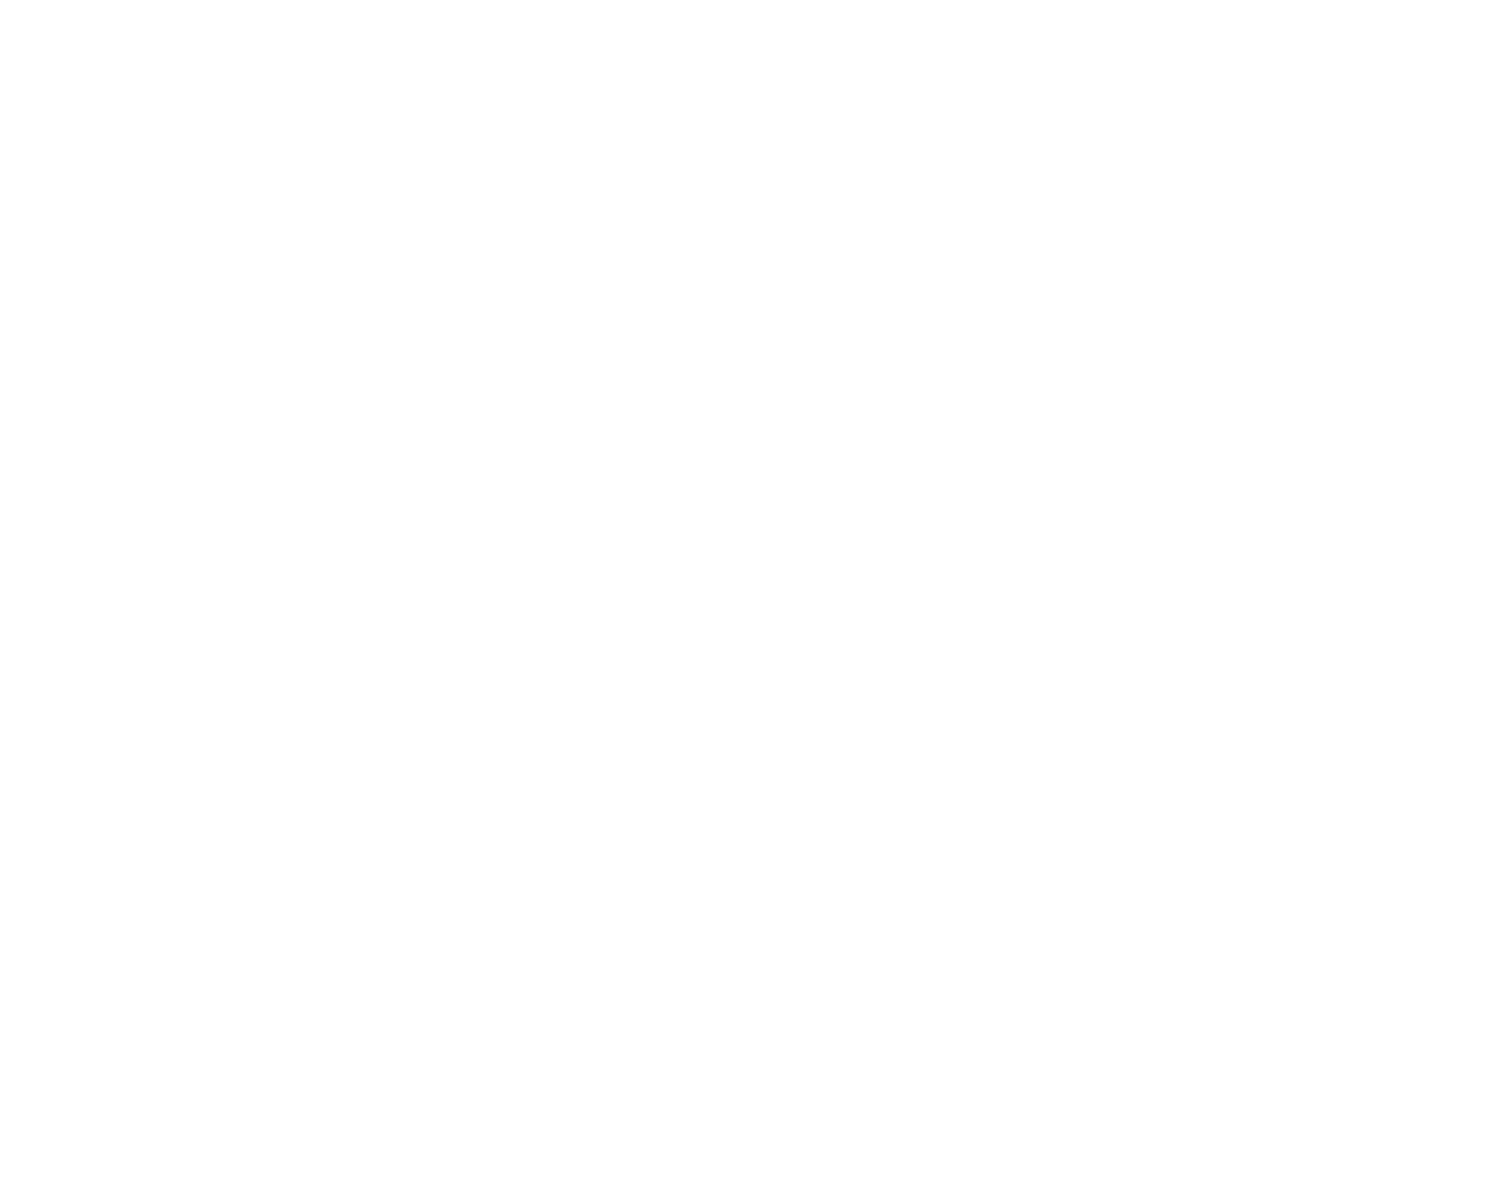 Elemental Excelerator